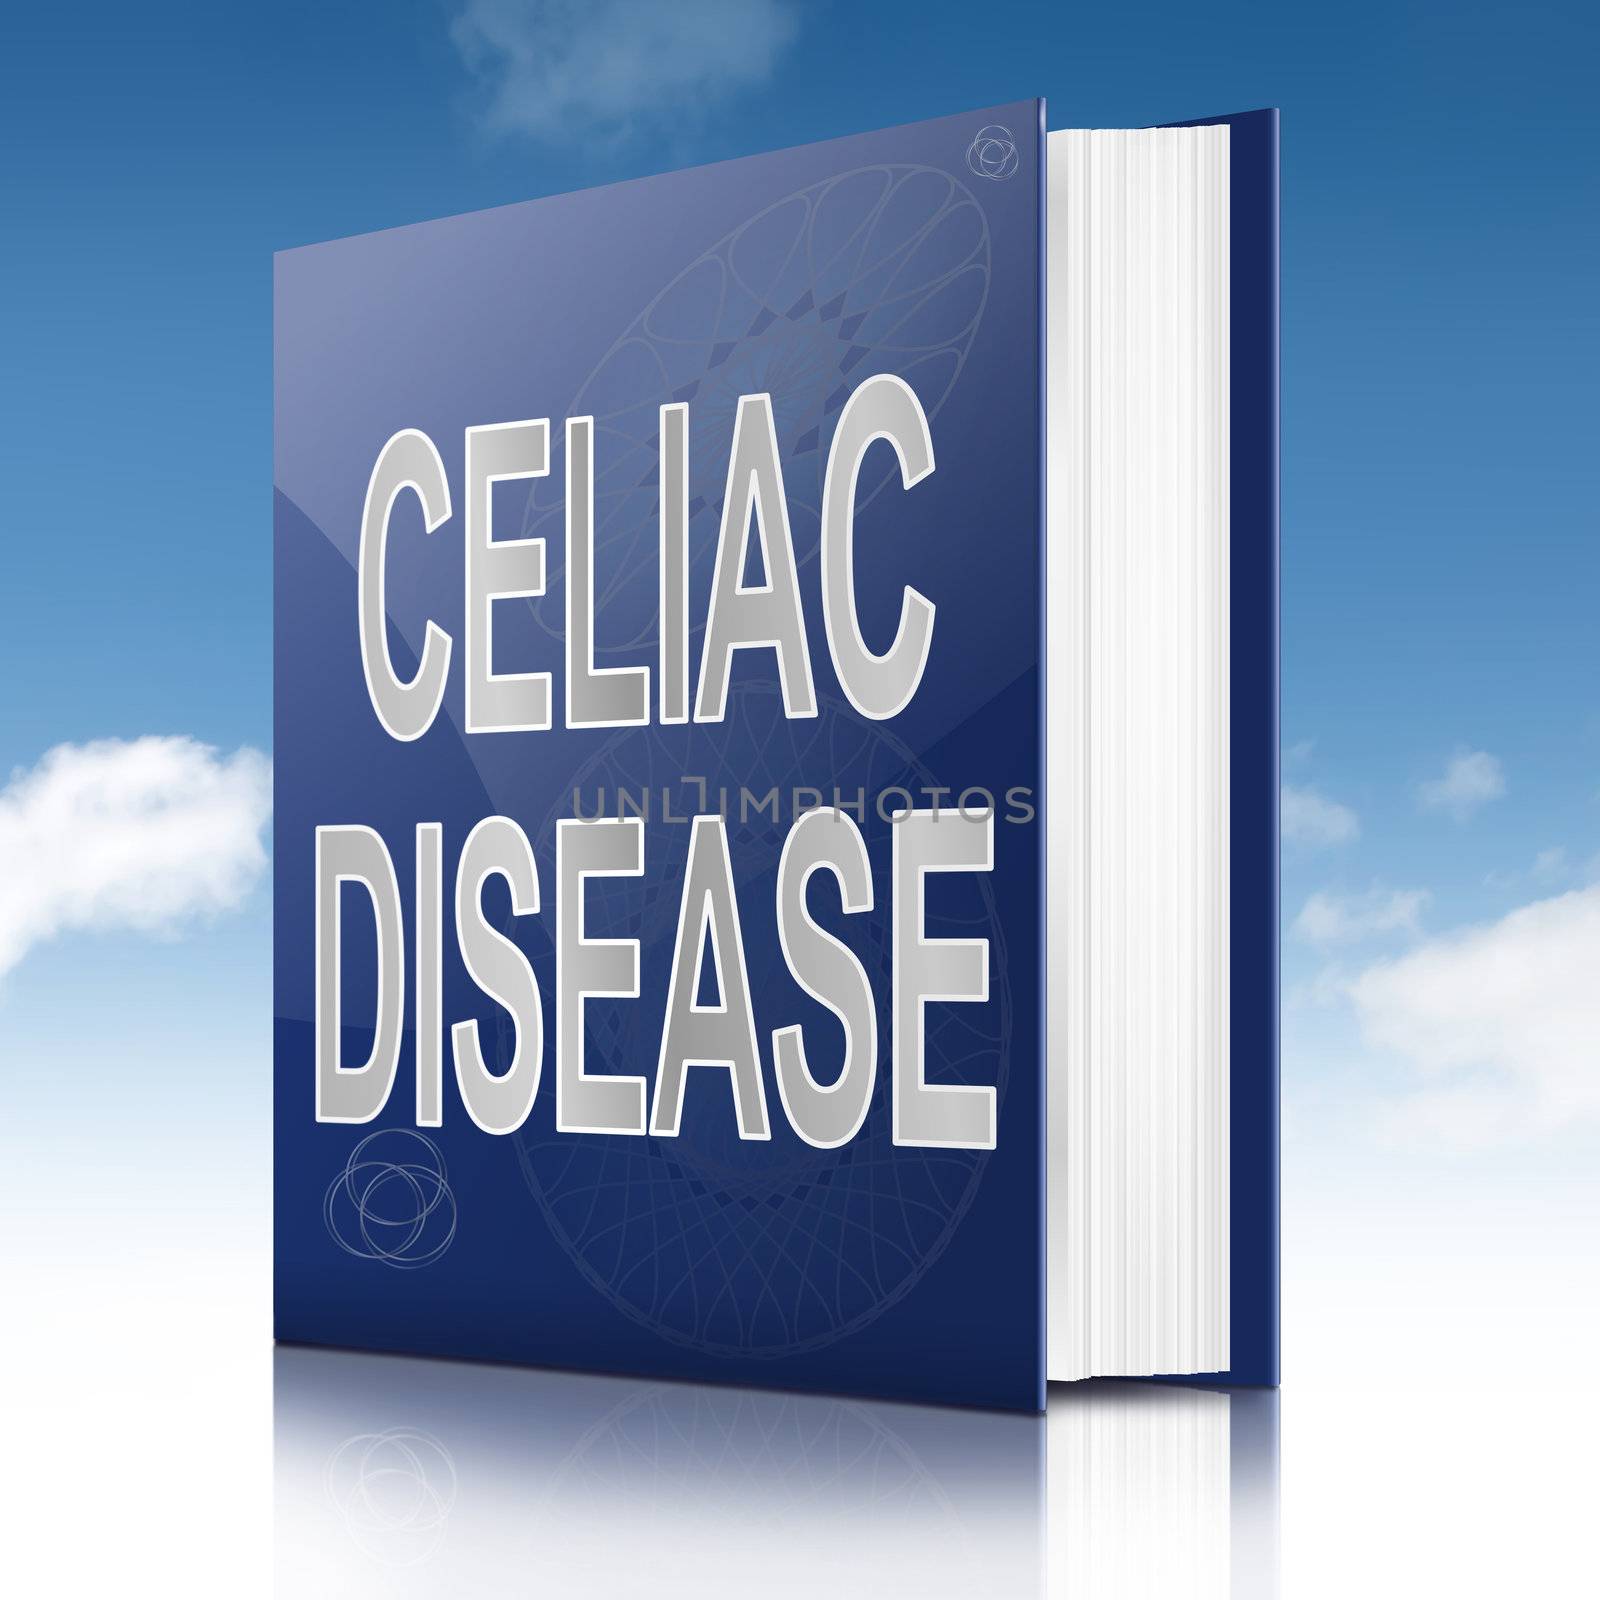 Celiac disease book. by 72soul